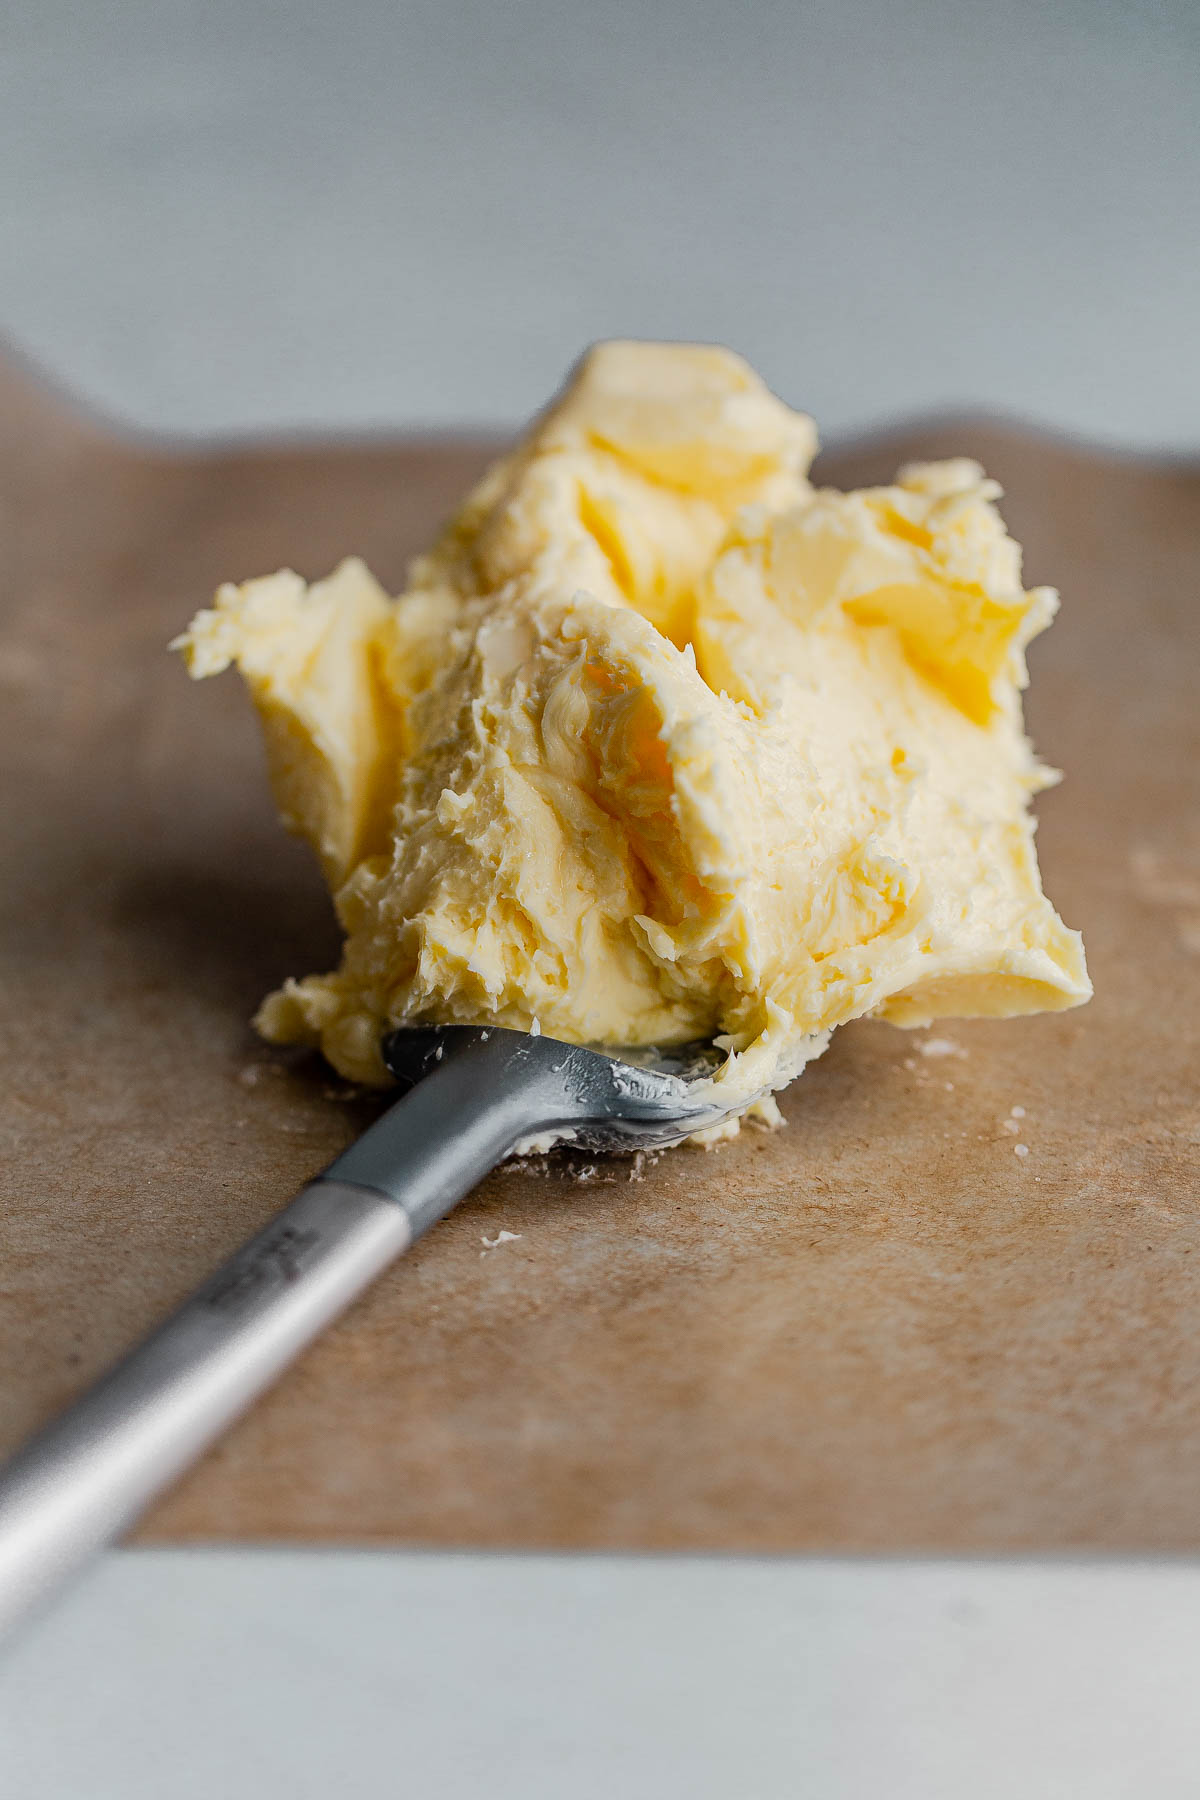 How to Make Cultured Butter (Cultured Butter Recipe)